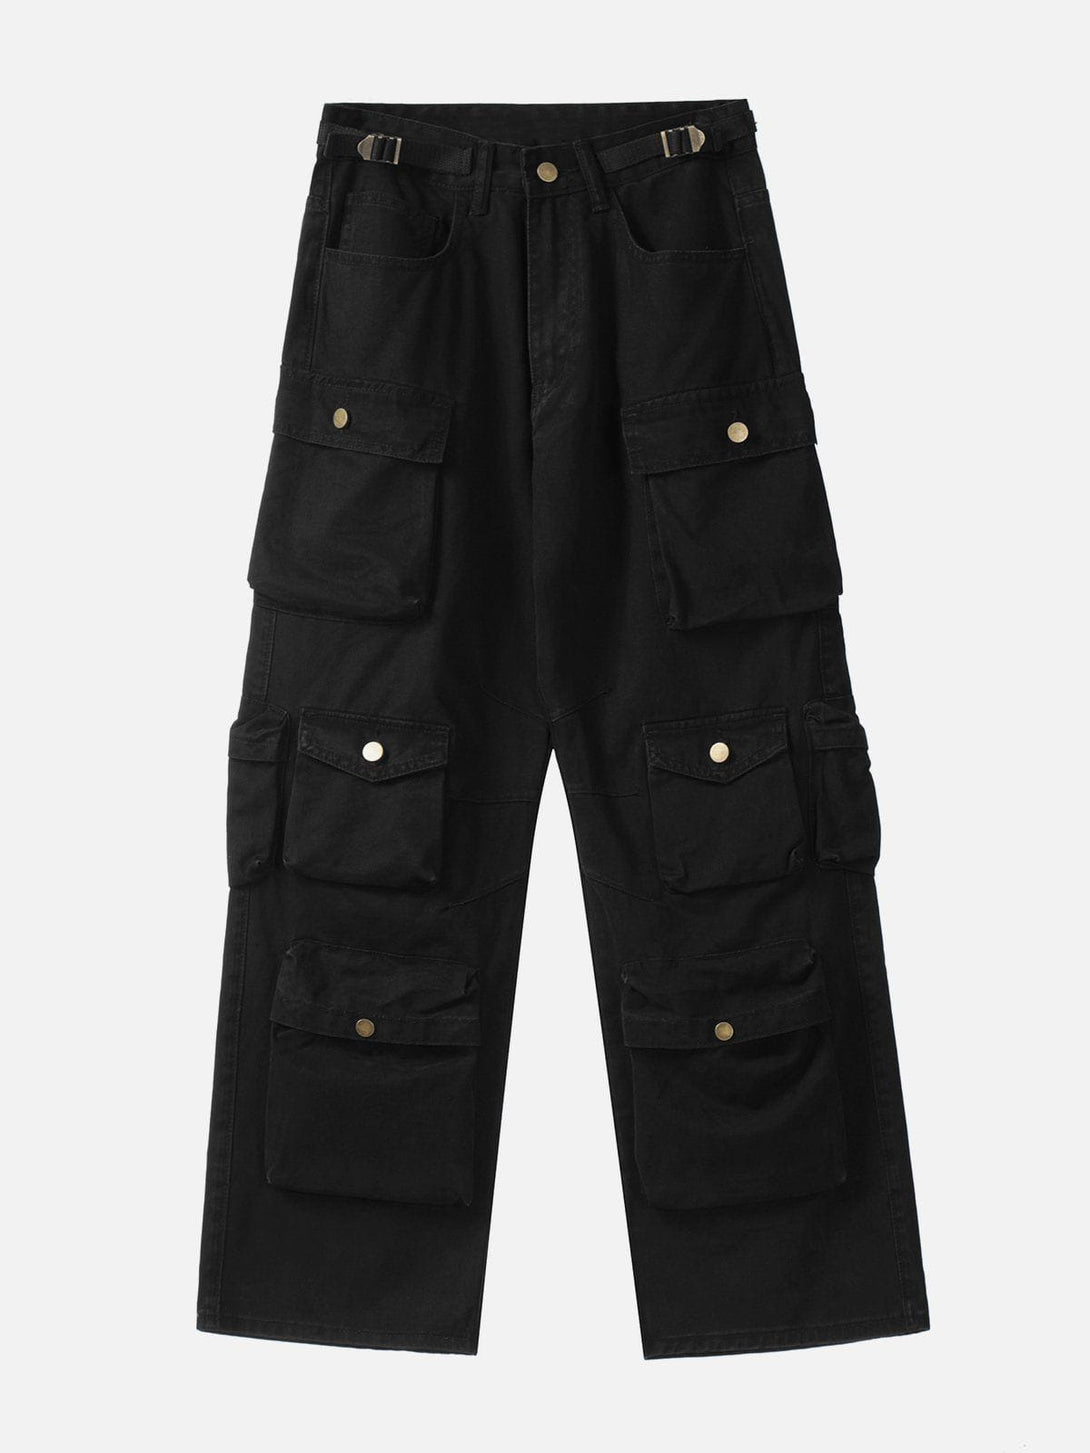 Majesda® - Vintage Multi-pocket Cargo Pants outfit ideas streetwear fashion